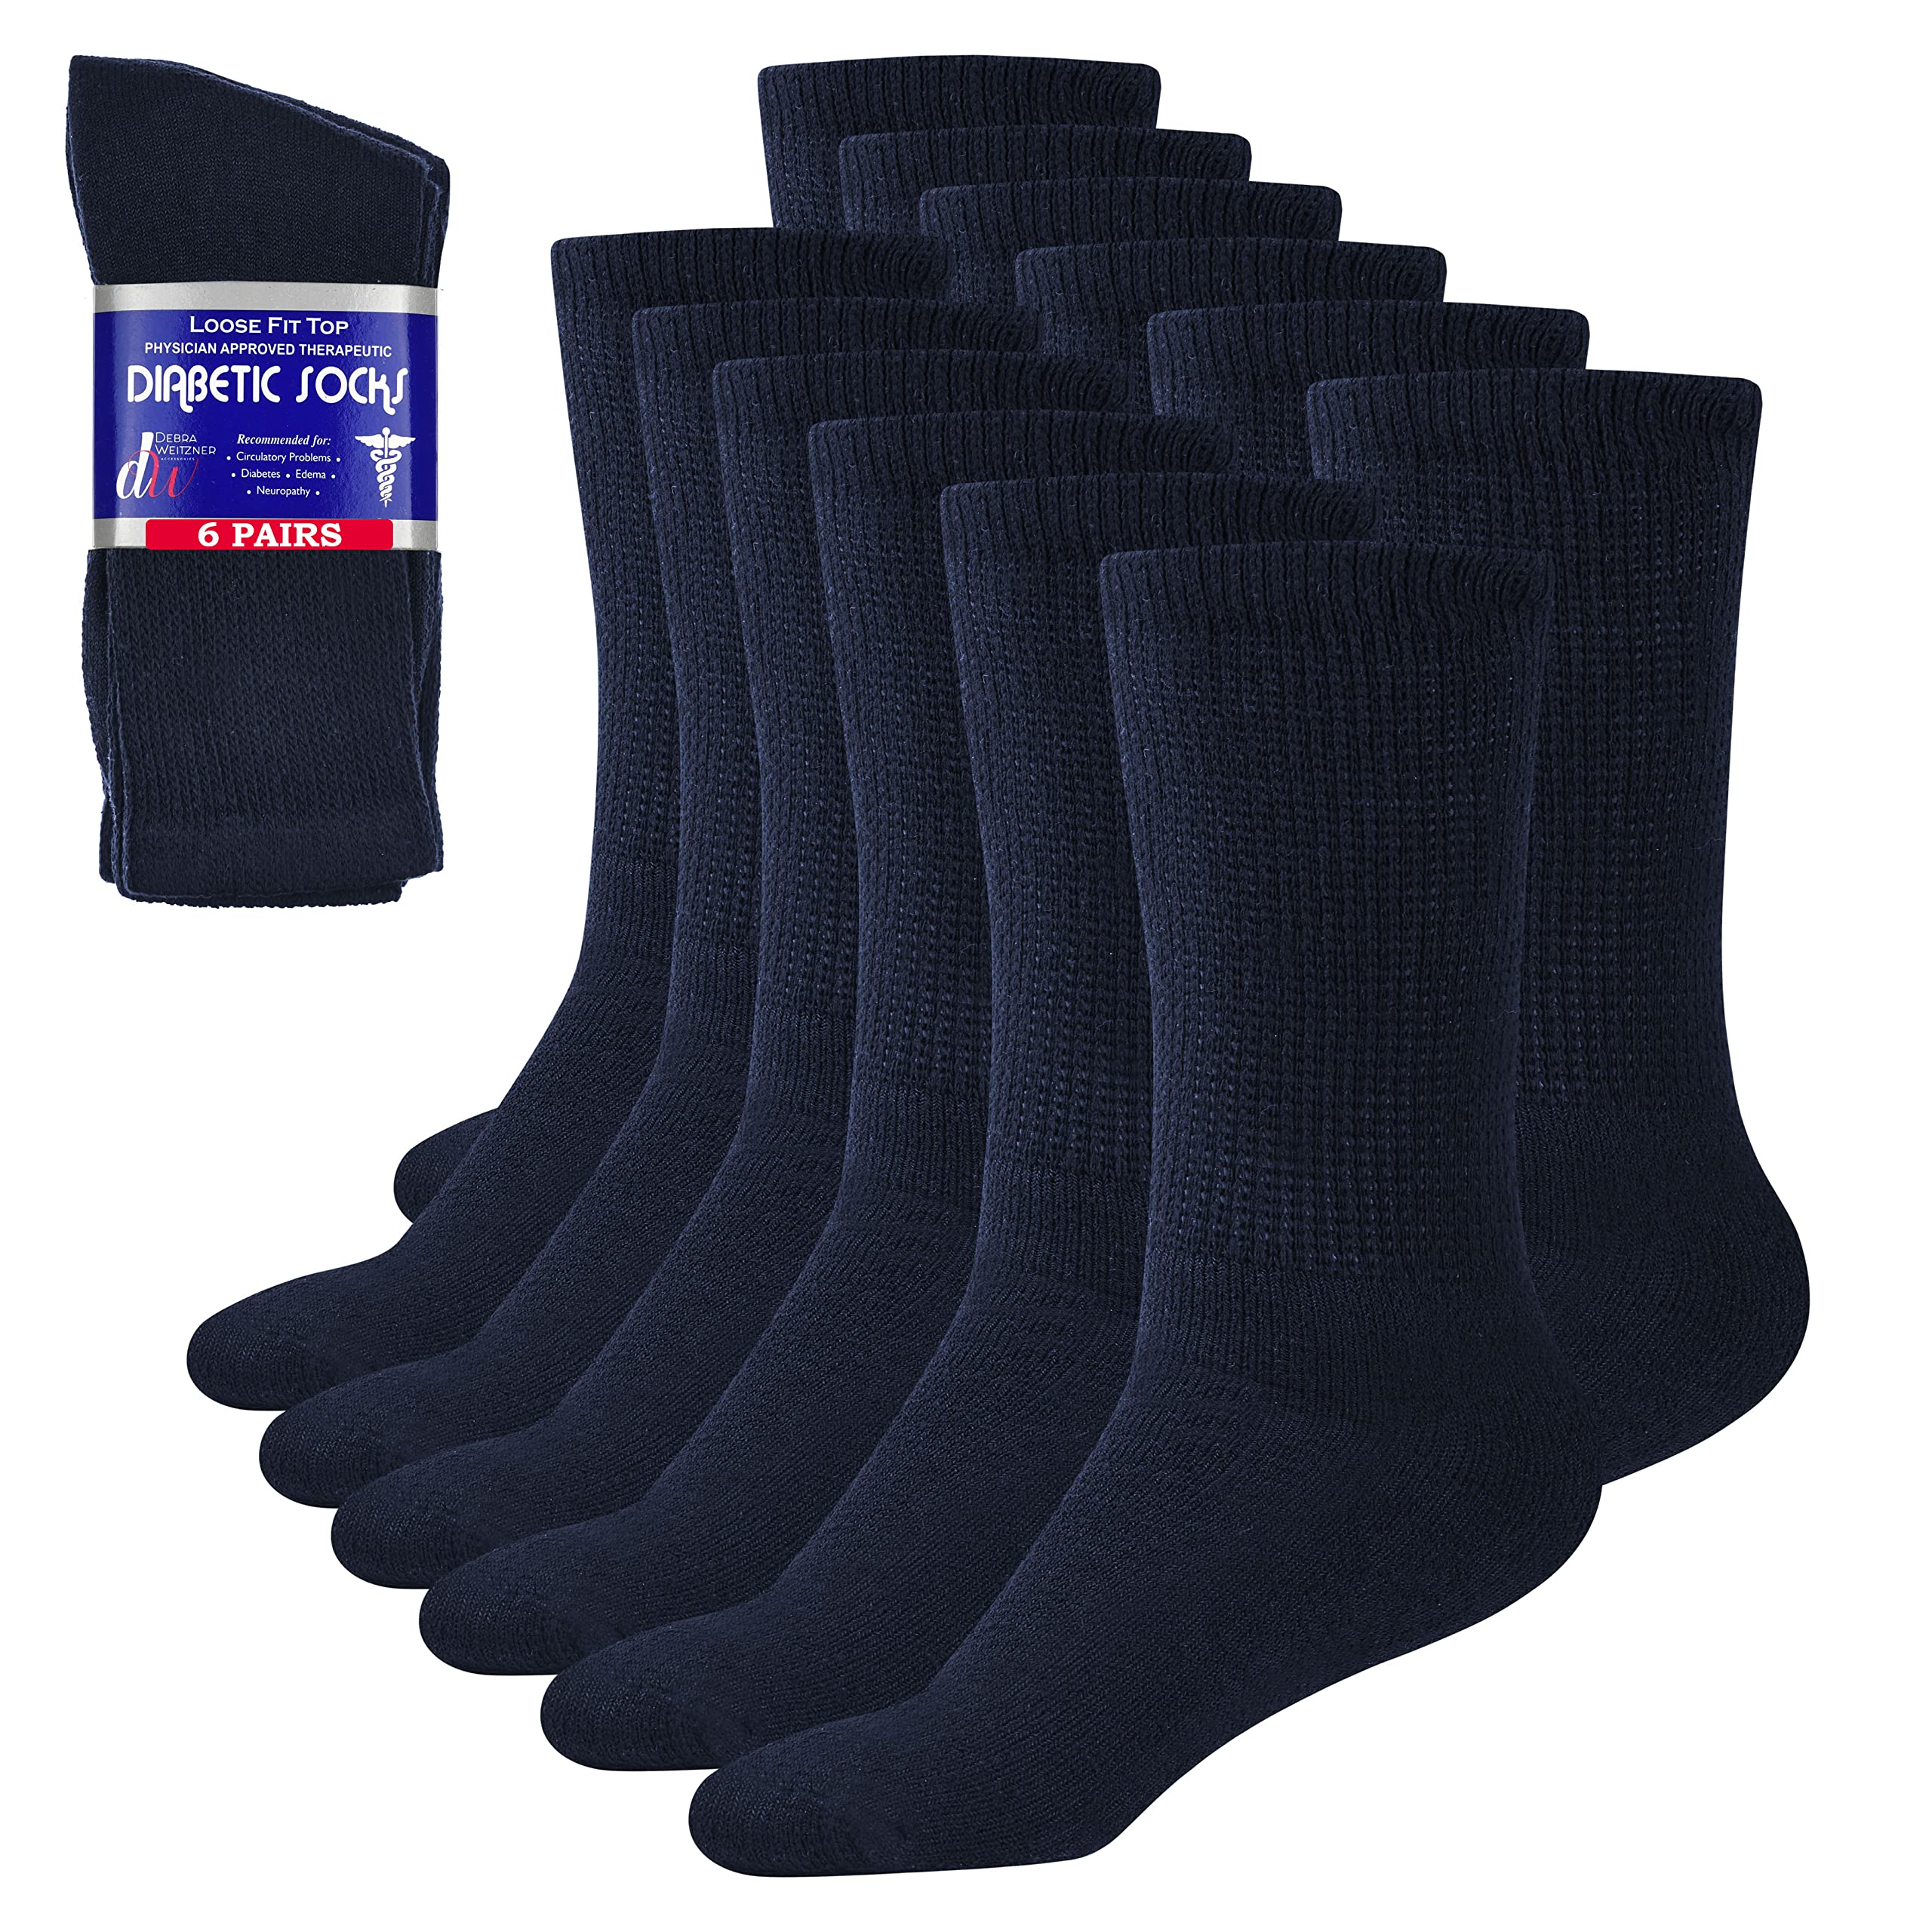 Debra Weitzner Diabetic Socks For Mens Womens Loose Fit Non-Binding cotton crew Socks 6 Pairs Navy 10-13